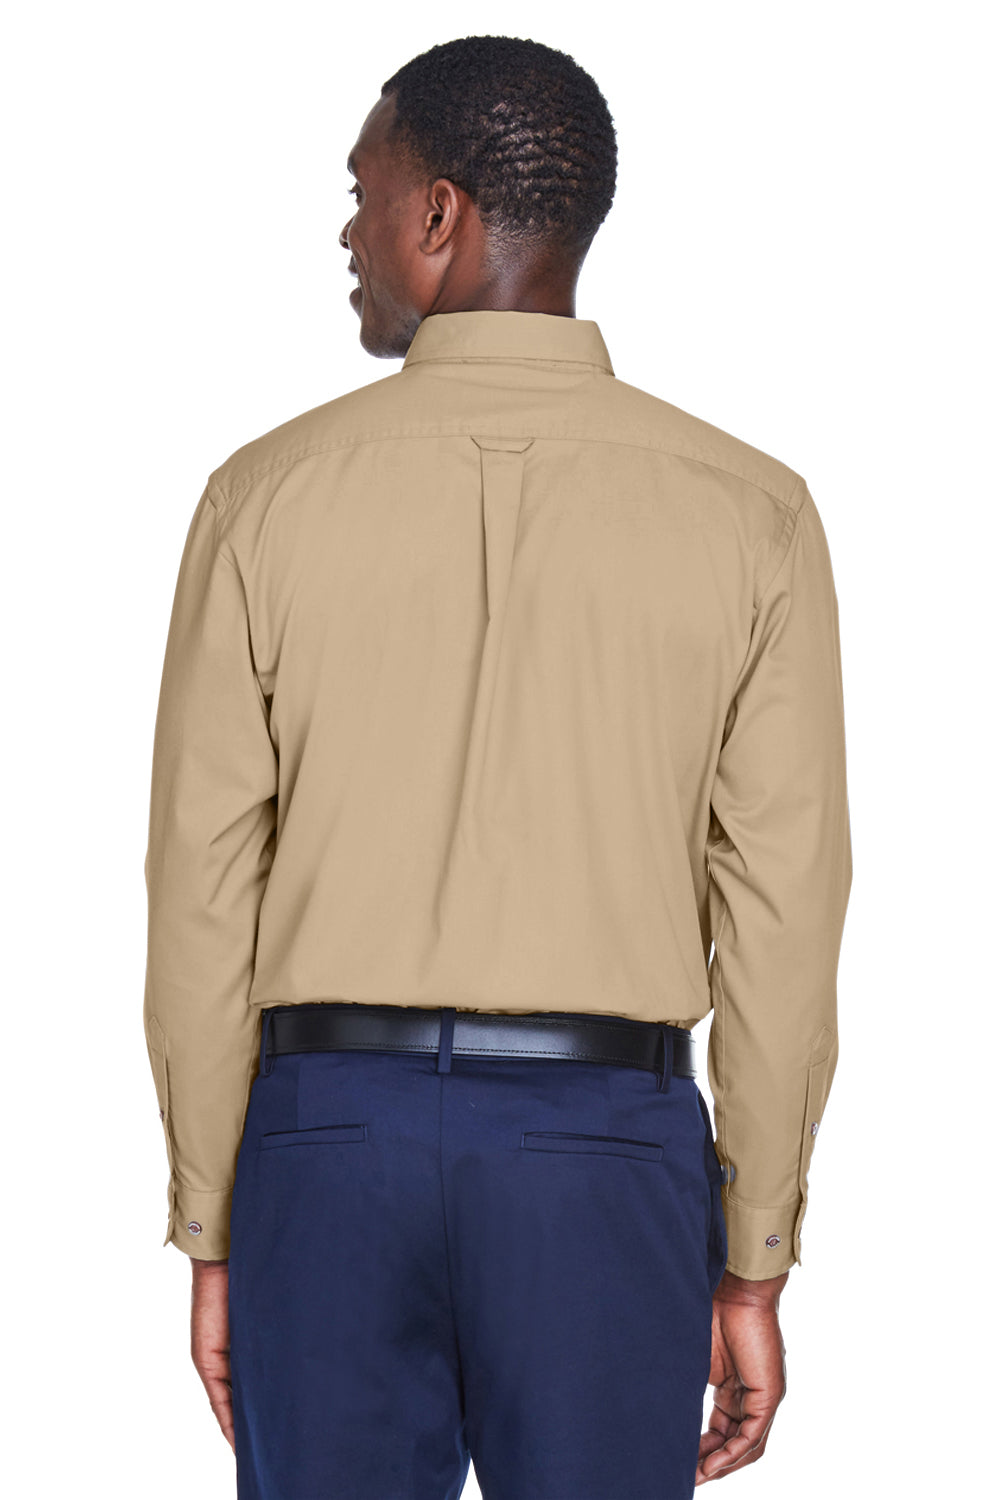 Harriton M500 Mens Wrinkle Resistant Long Sleeve Button Down Shirt w/ Pocket Stone Brown Back